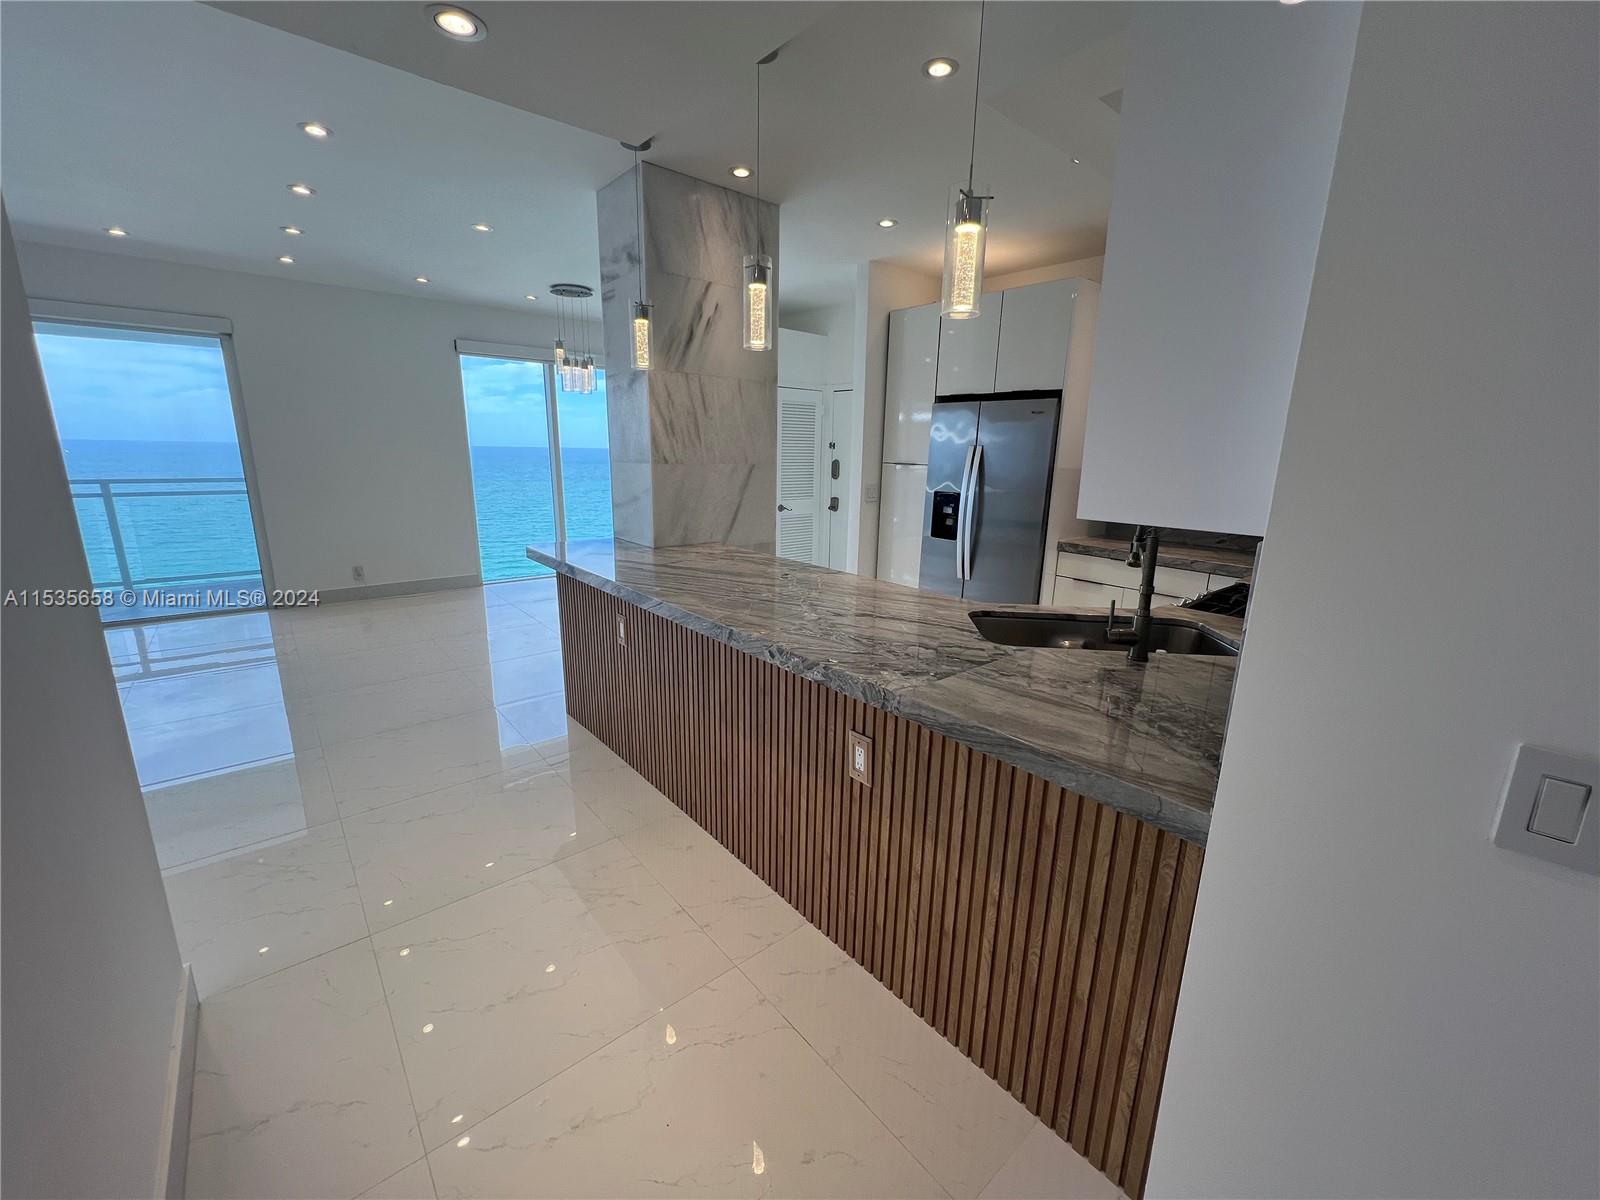 Property for Sale at 2030 S Ocean Dr 2221, Hallandale Beach, Broward County, Florida - Bedrooms: 2 
Bathrooms: 2  - $1,150,000